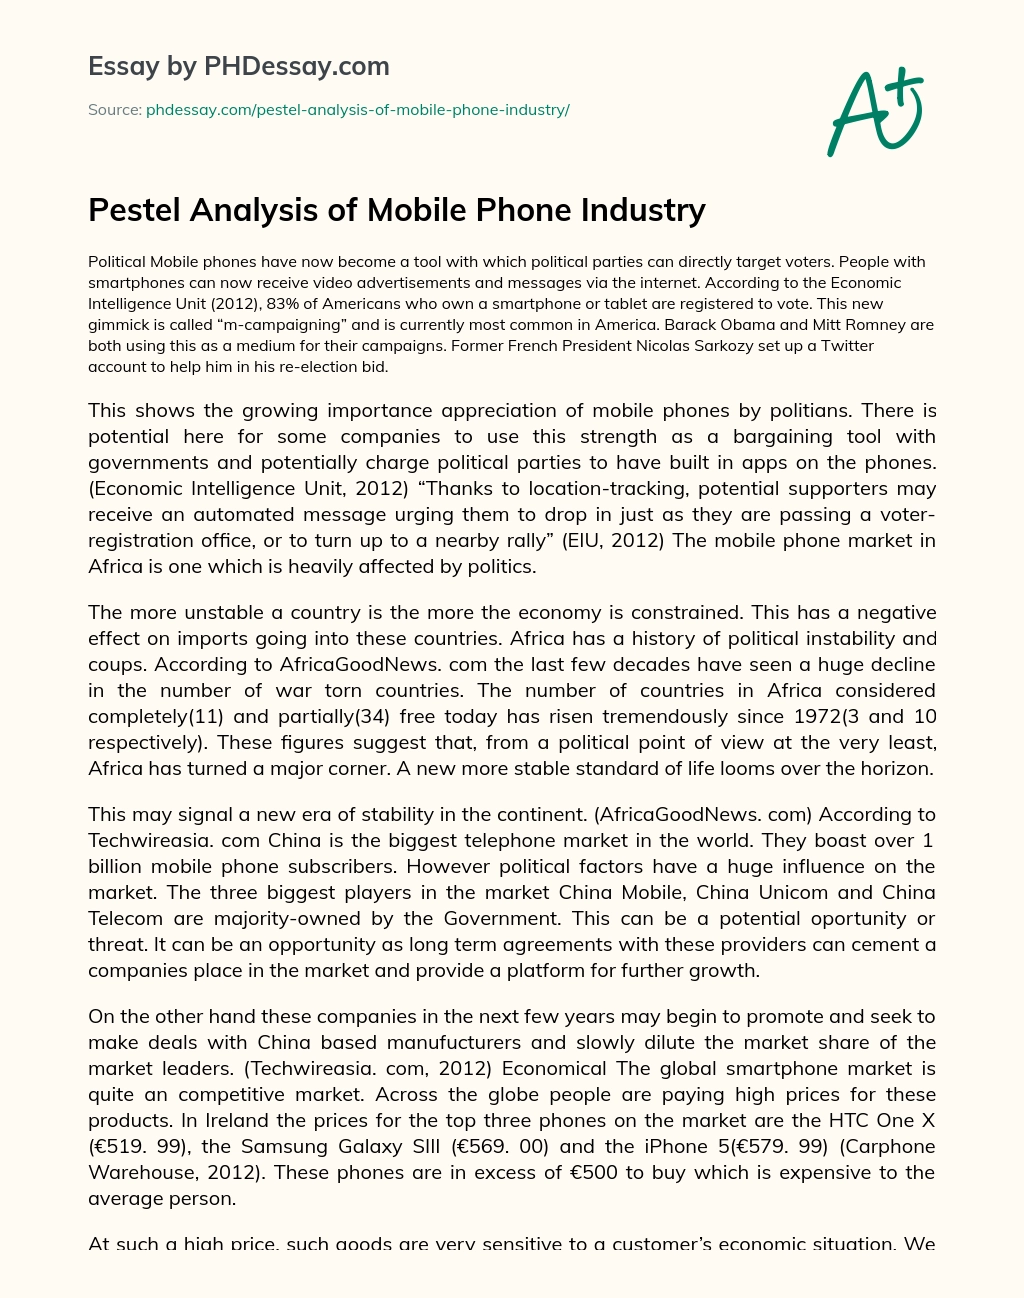 Pestel Analysis of Mobile Phone Industry essay